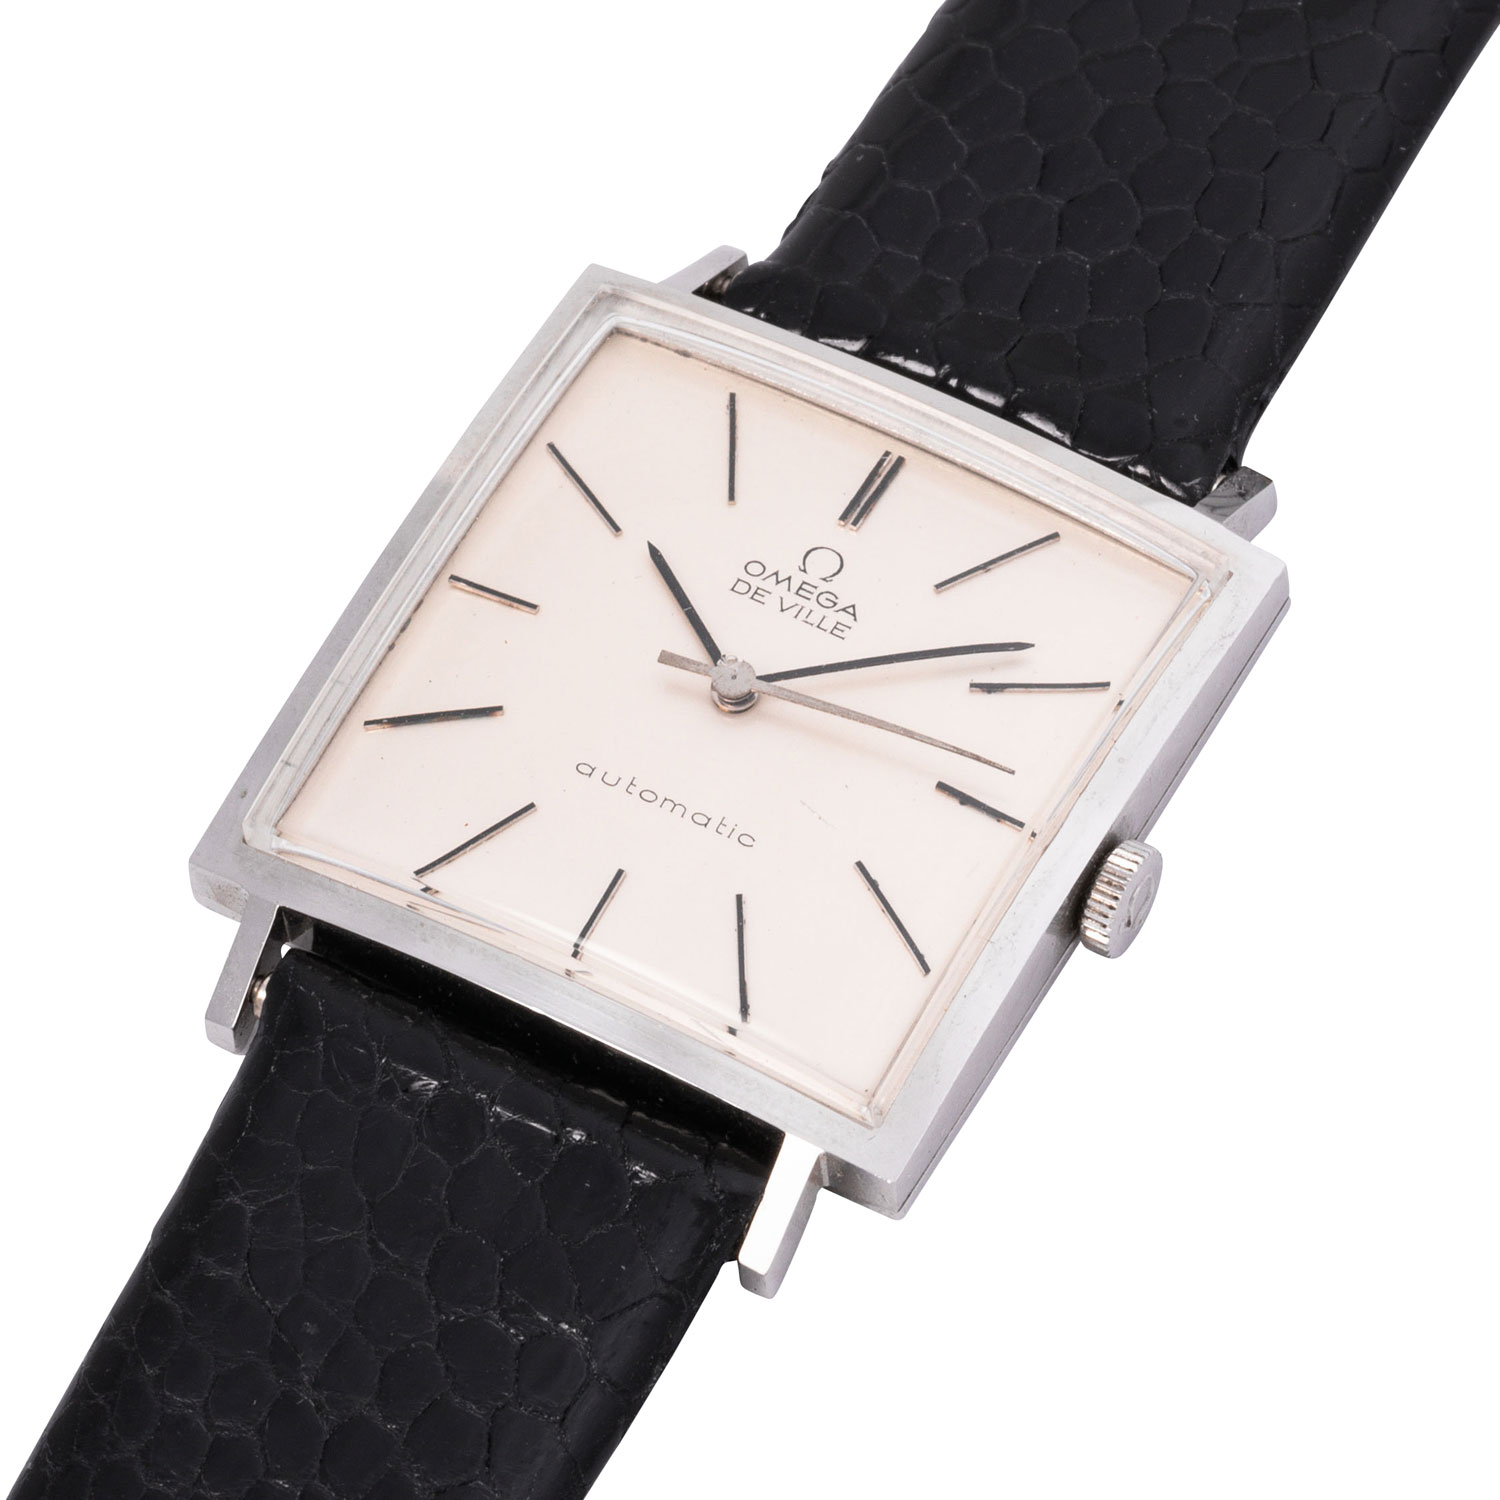 OMEGA Vintage De Ville Armbanduhr, Ref. 161.021. Ca. 1960er Jahre. - Bild 5 aus 7